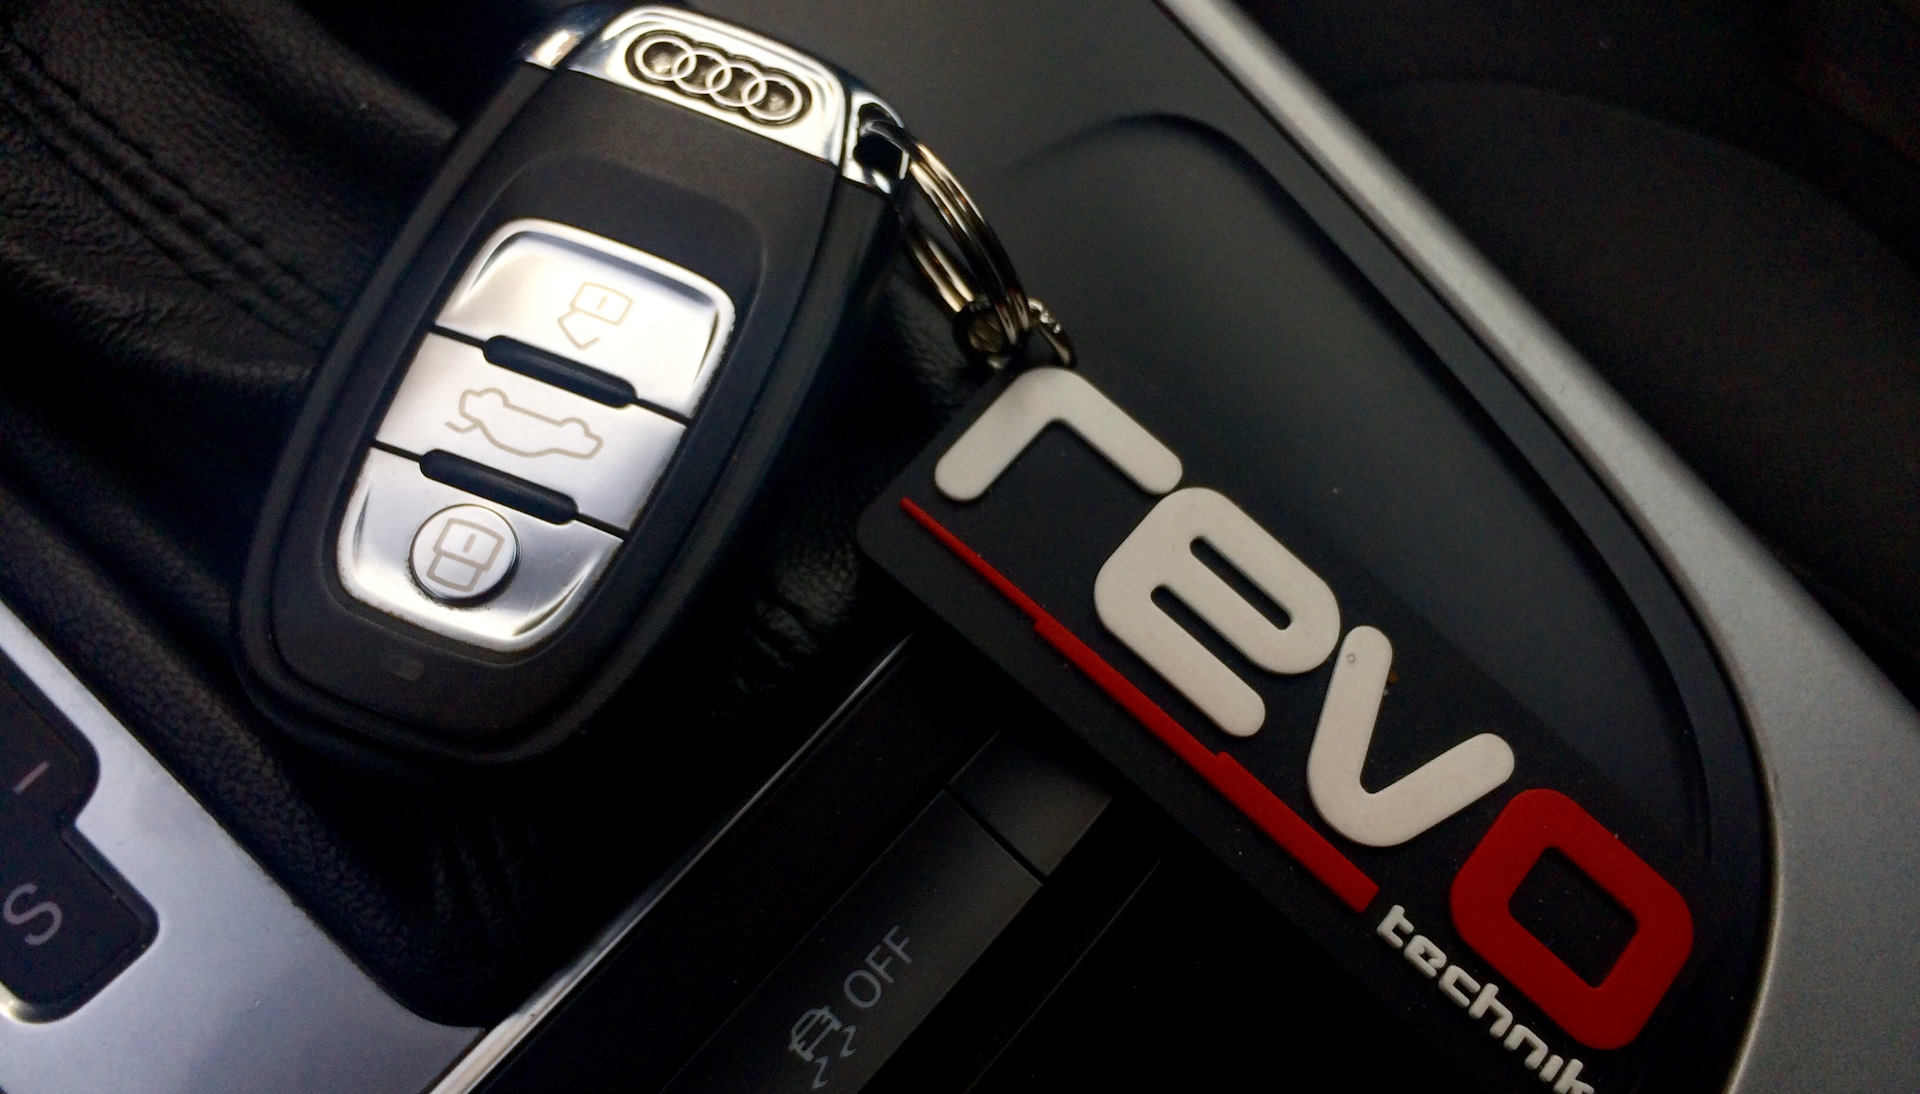 Ауди стейдж 1. Revo Audi. Revo Stage 3 наклейка. Брелок Revo Ауди. Revo визитка.